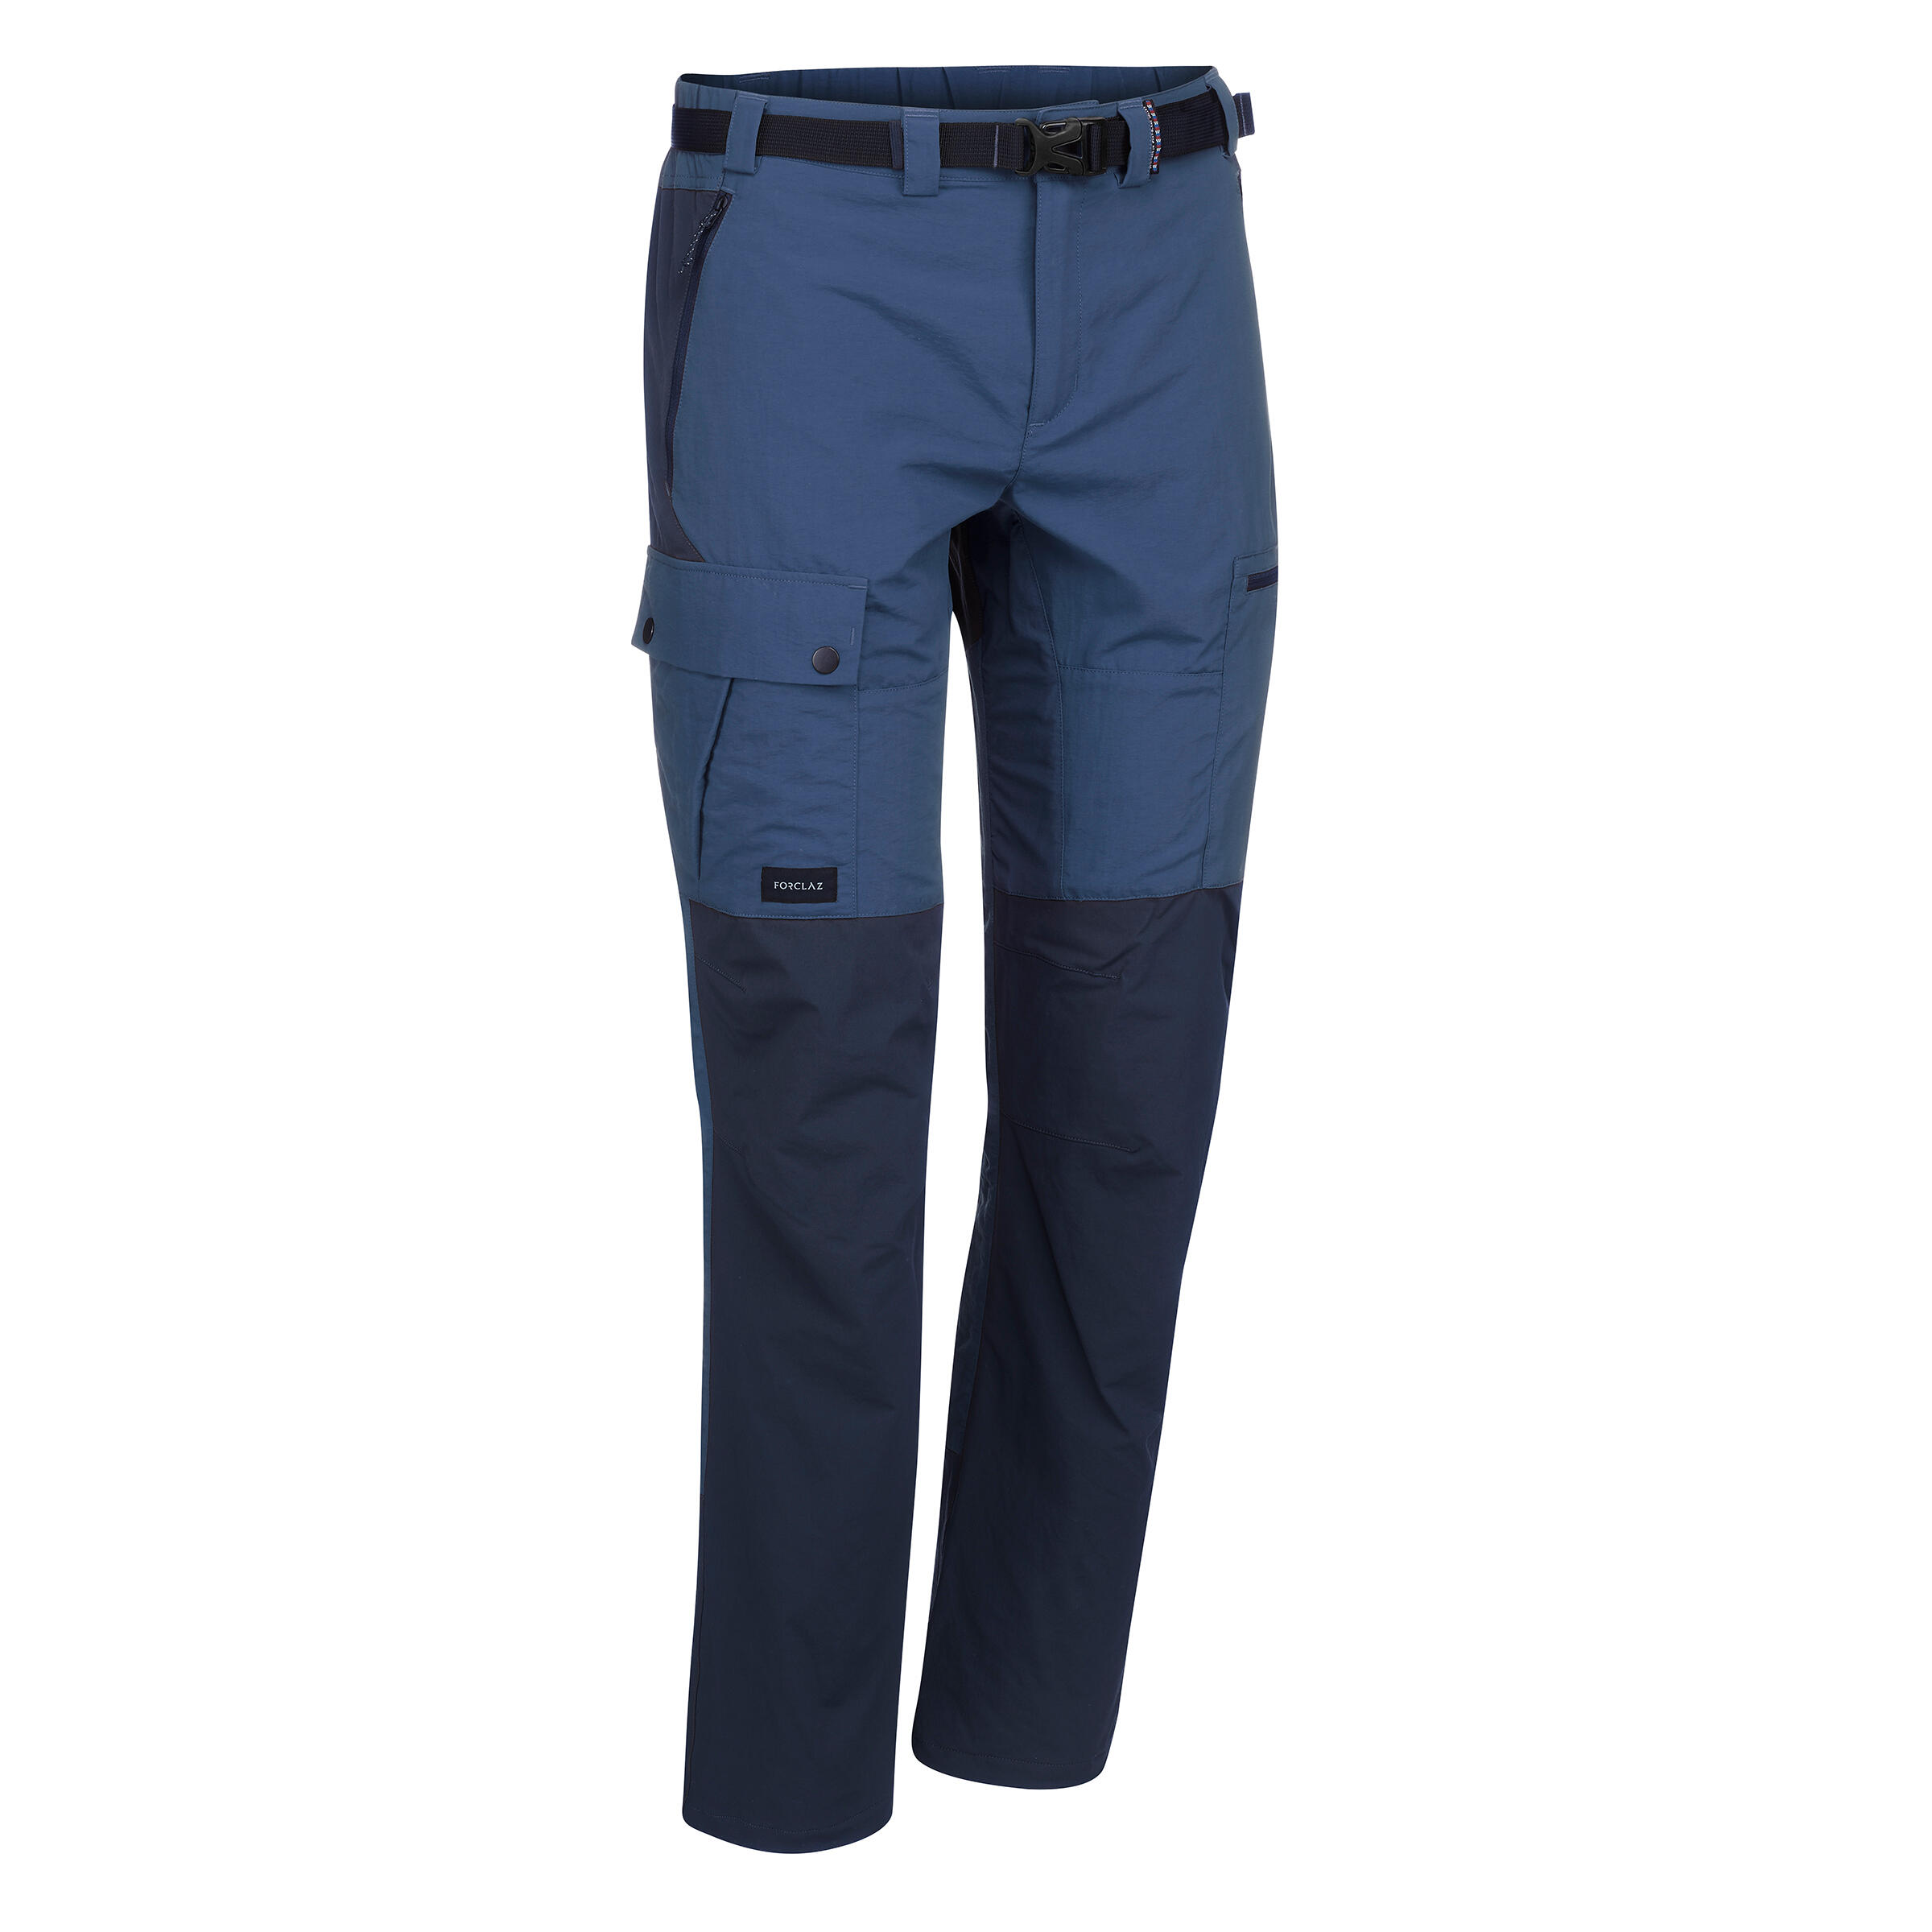 FORCLAZ Men's Mountain Trekking Trousers -TREK 500 - Blue